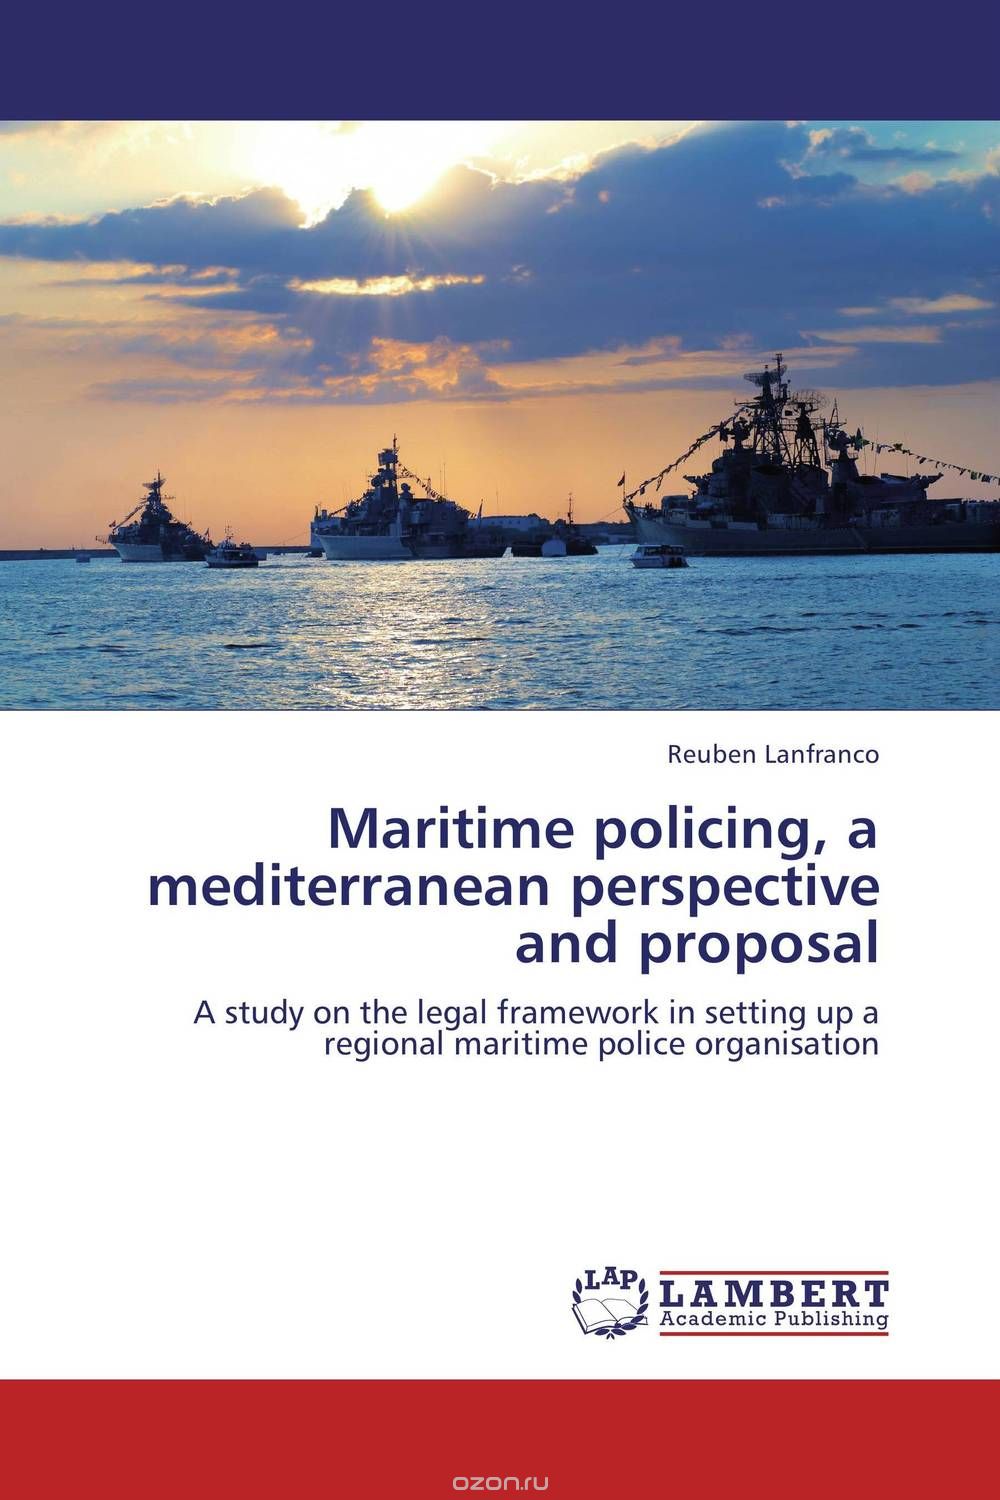 Скачать книгу "Maritime policing, a mediterranean perspective and proposal"